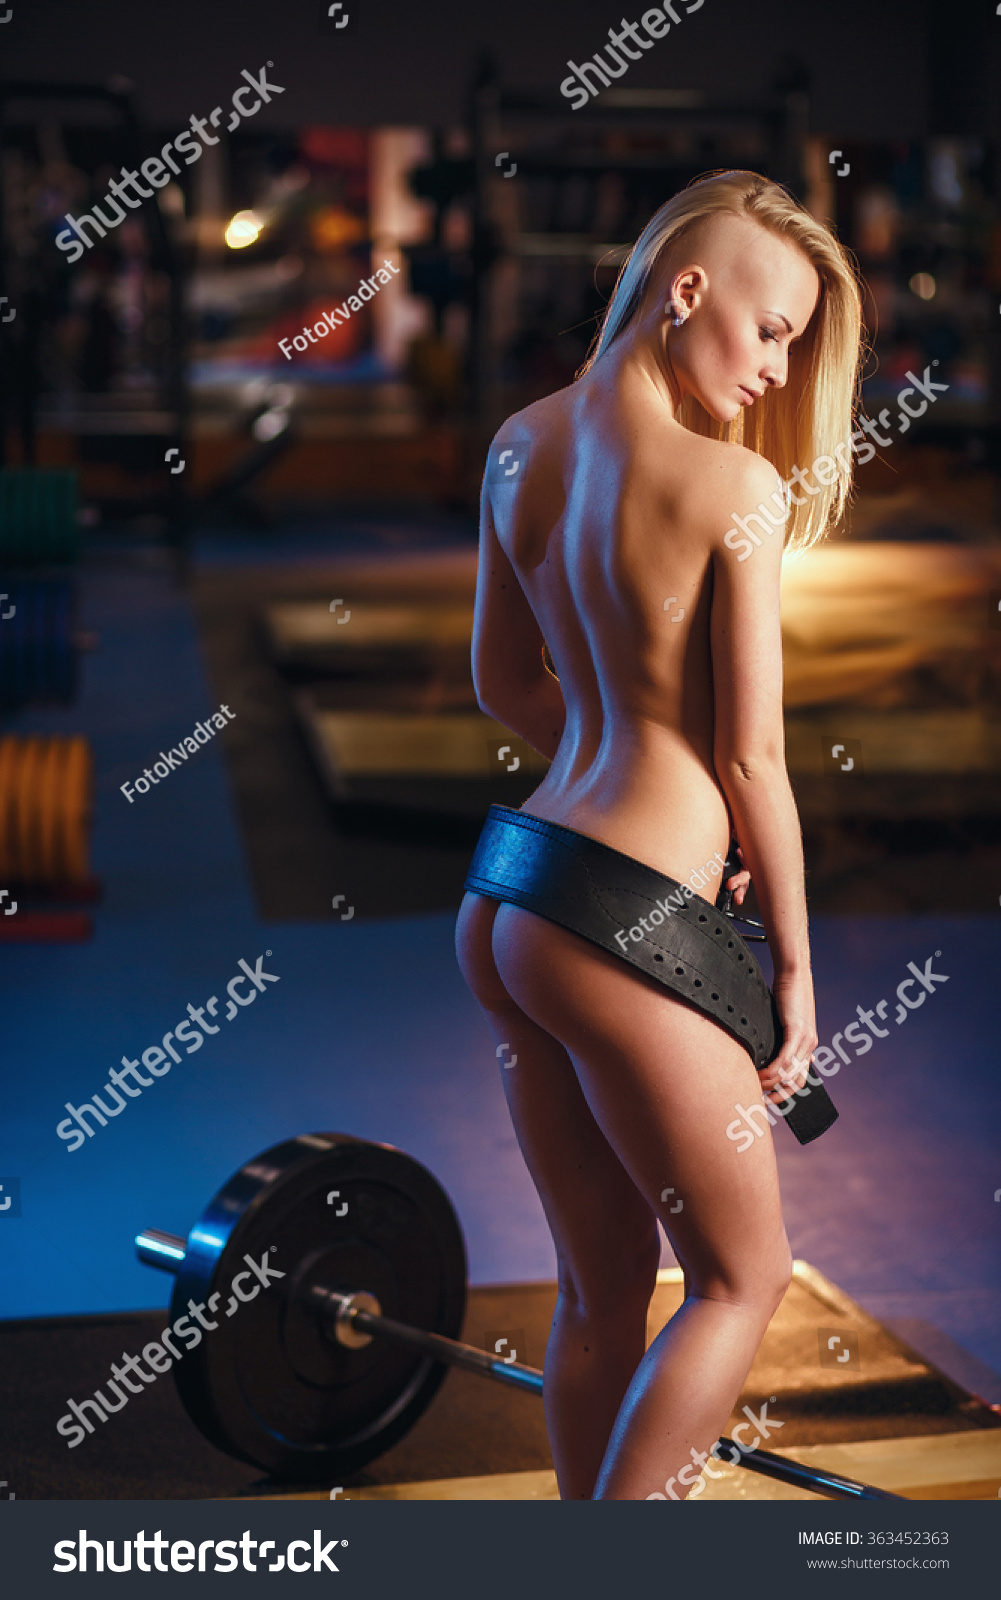 Nude Girl Athlete